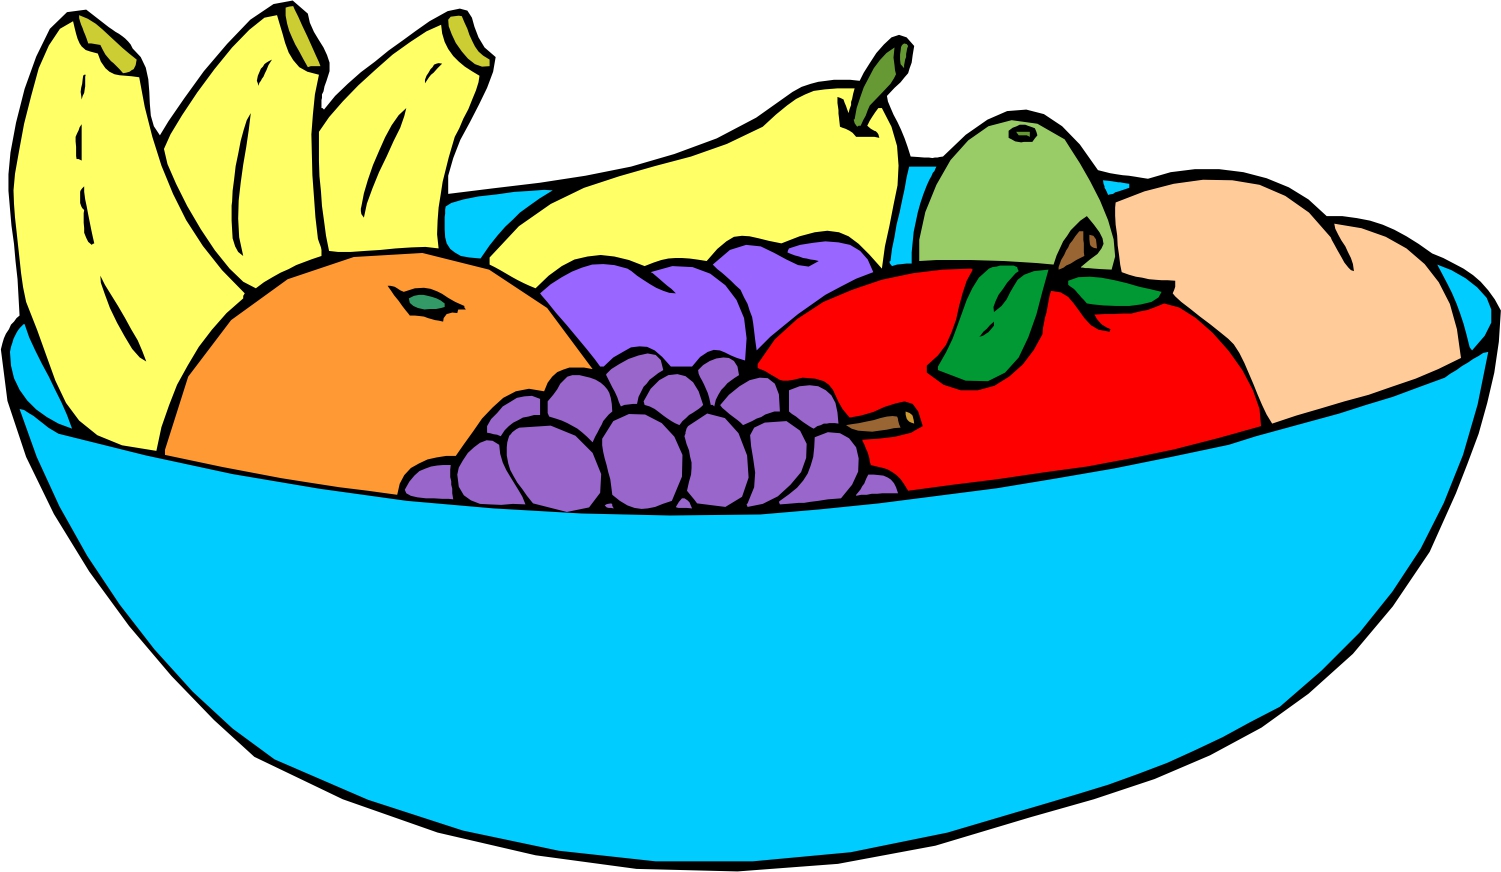 Fruit Bowl Clip Art Clip Art 